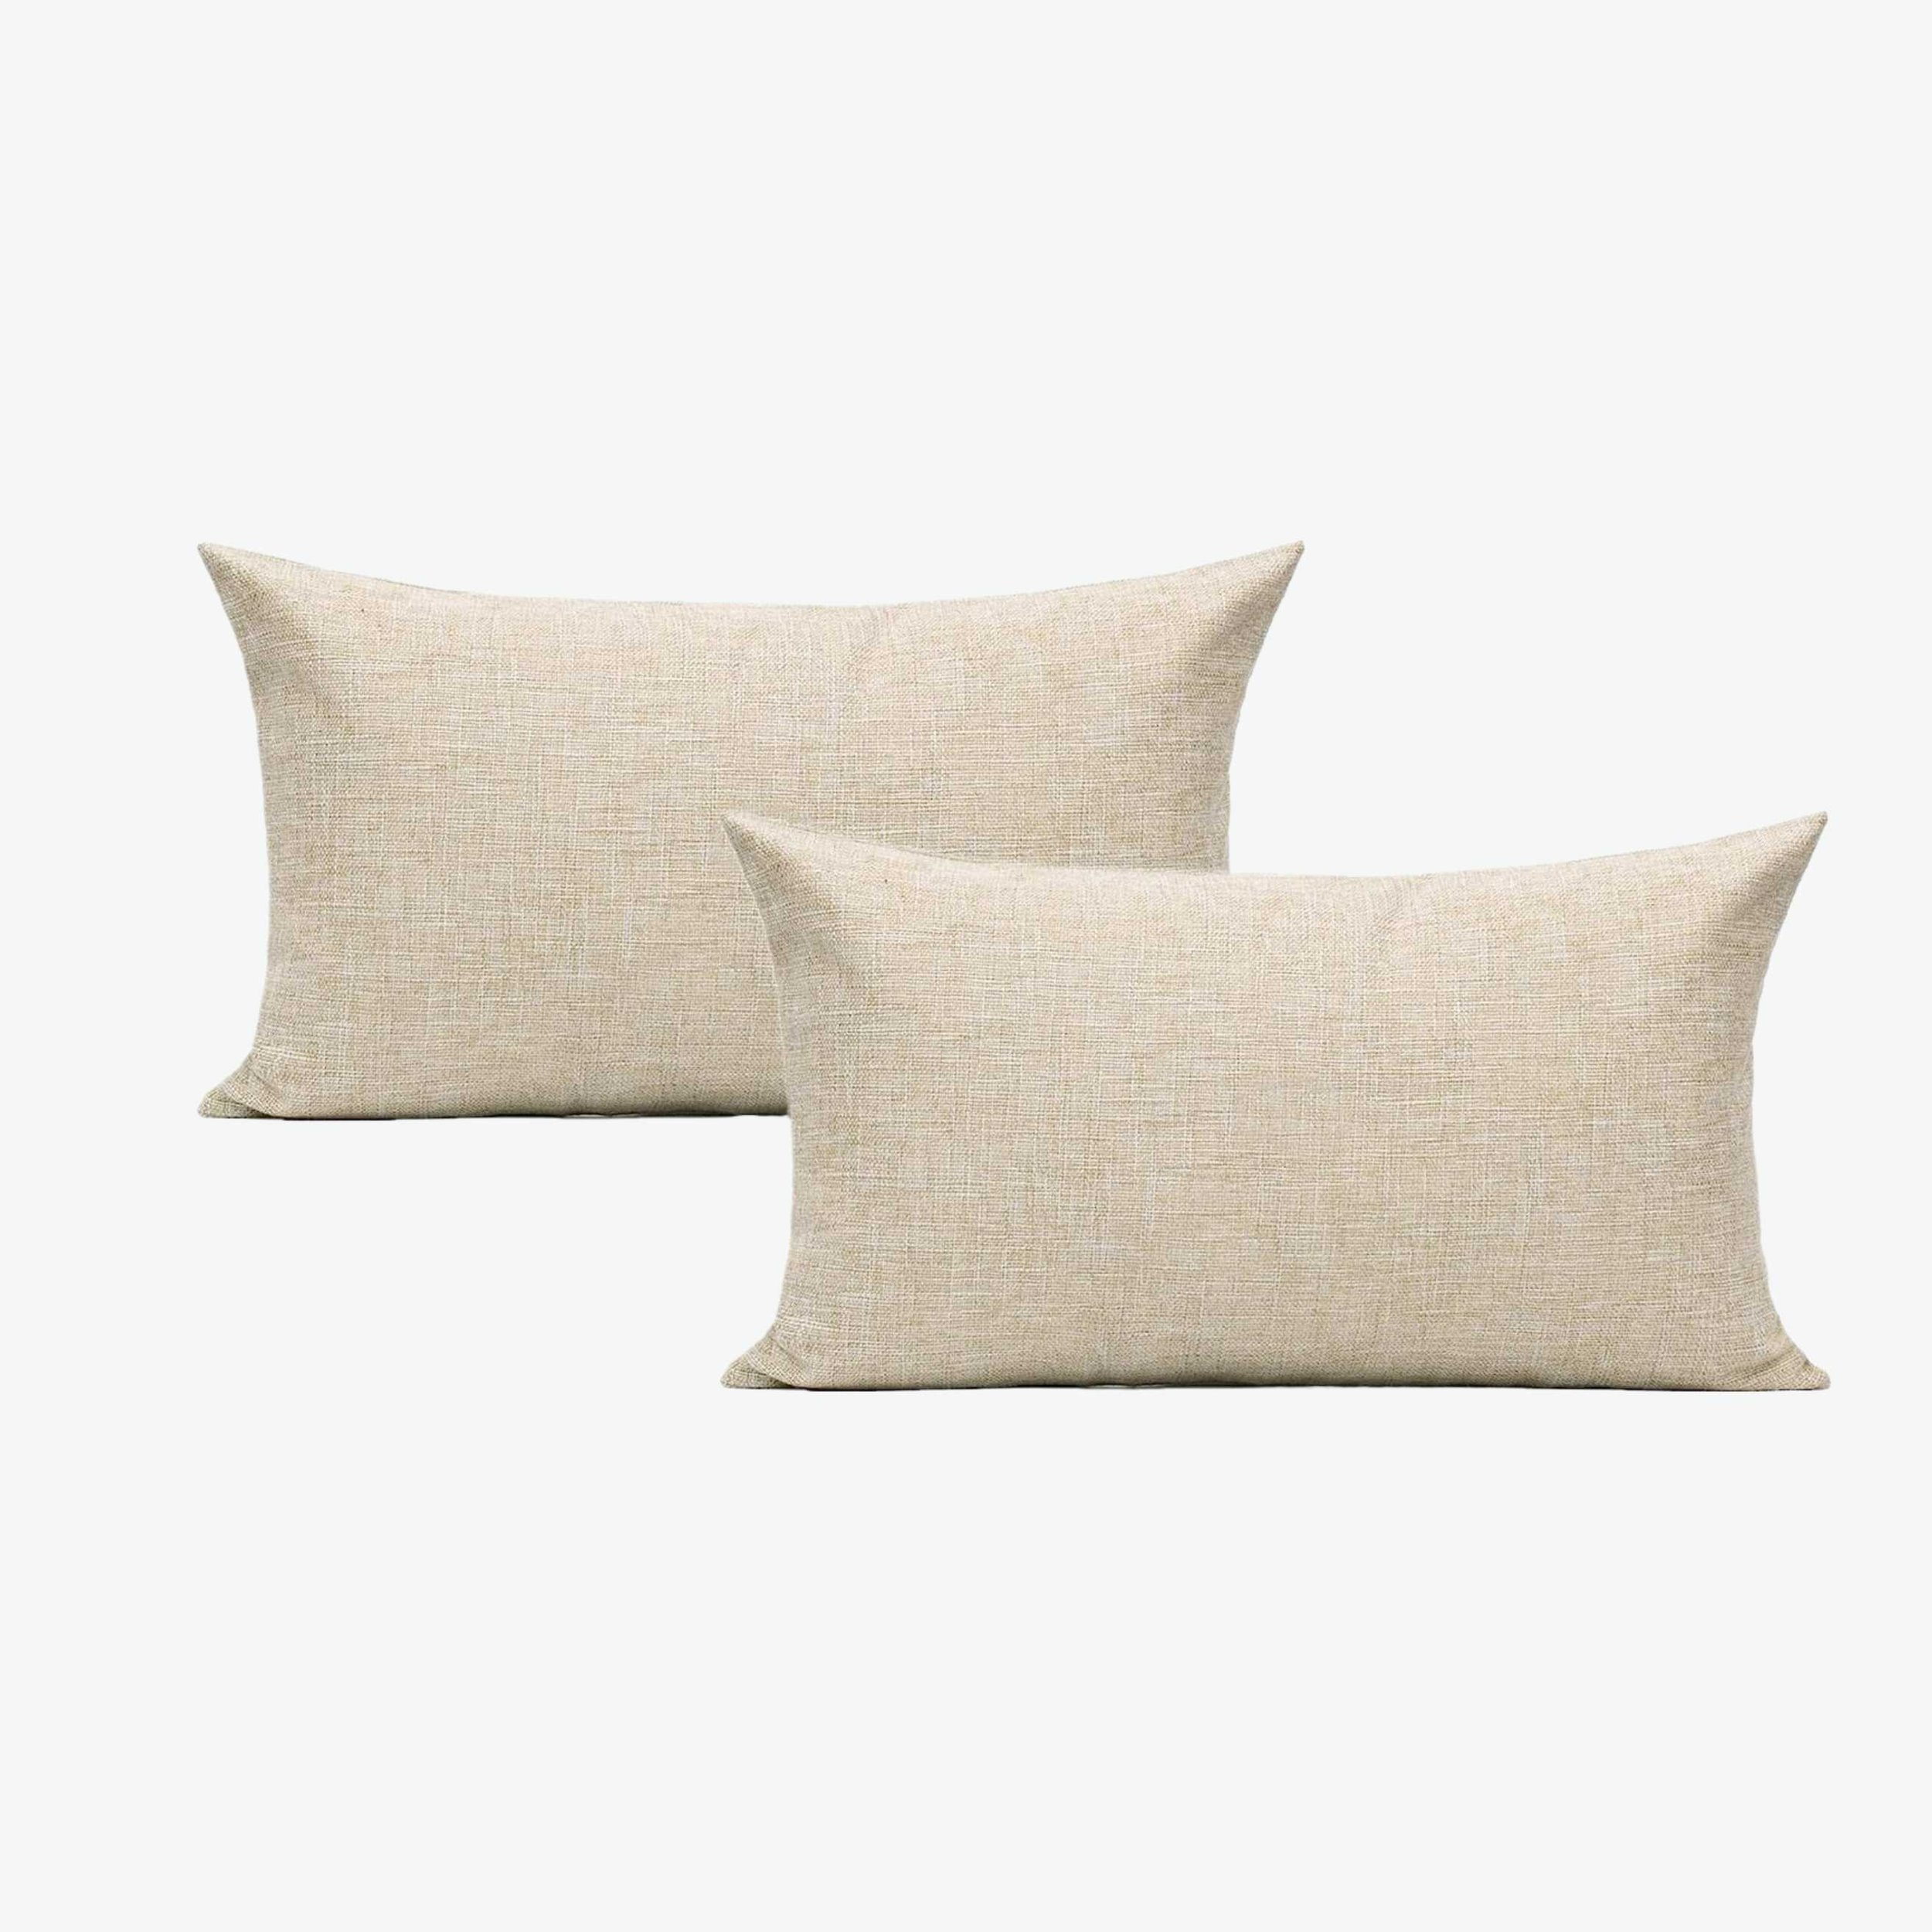 Throw Pillow Cover, 12x20, Set of 2.jpg